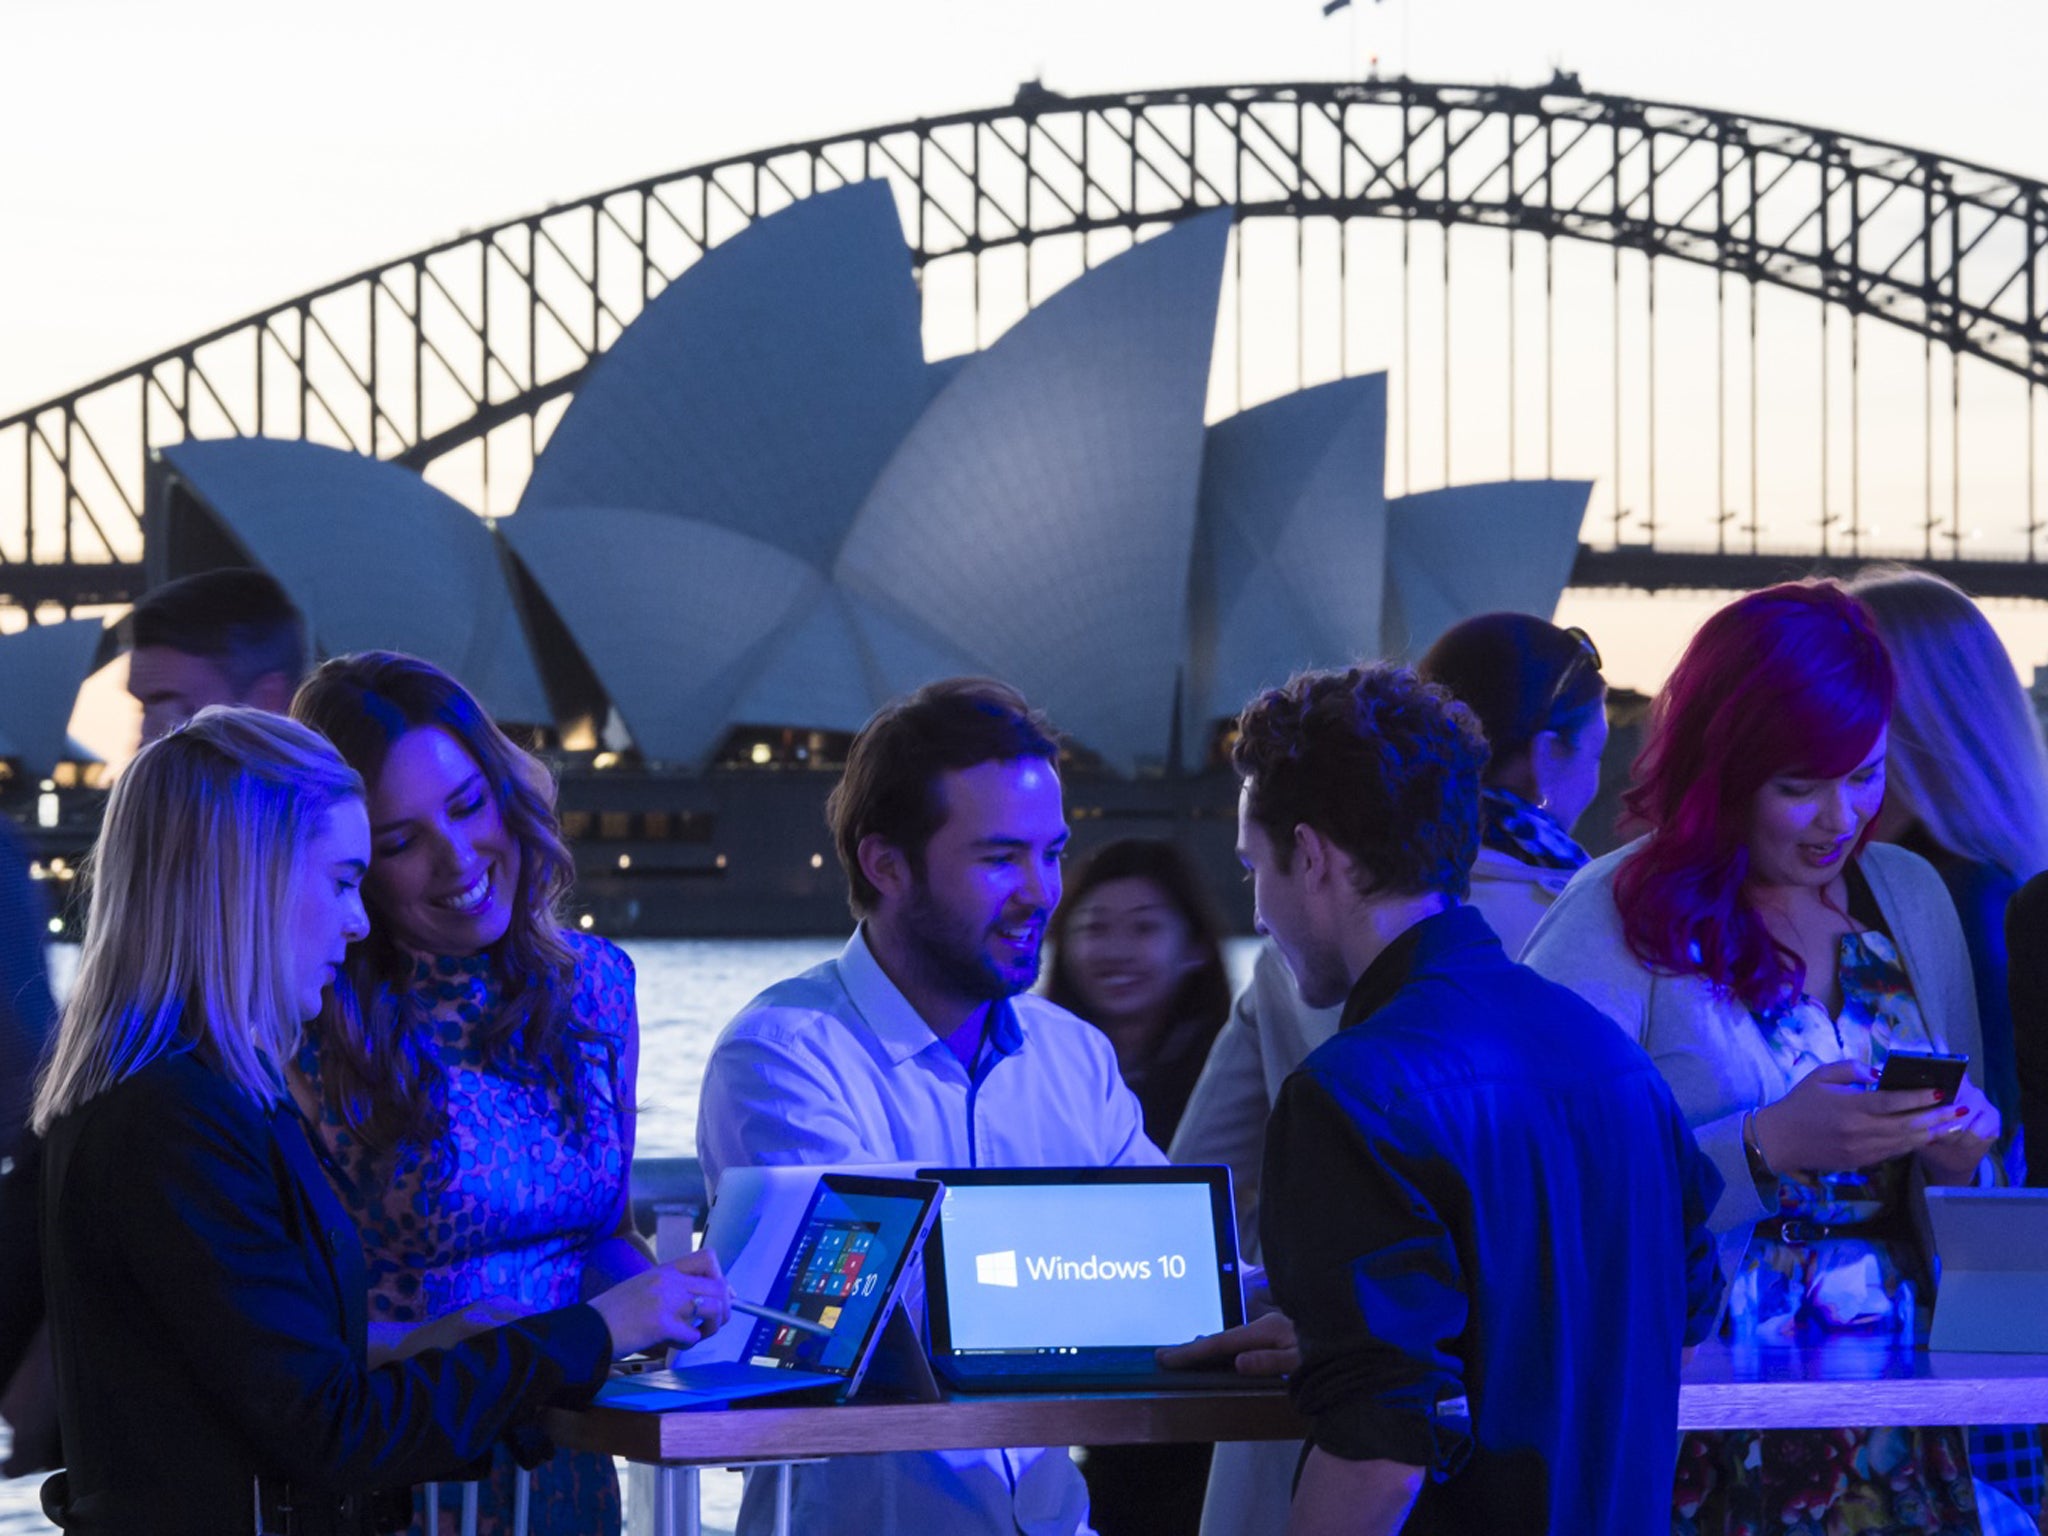 Fans celebrate the launch of Windows 10 in Sydney